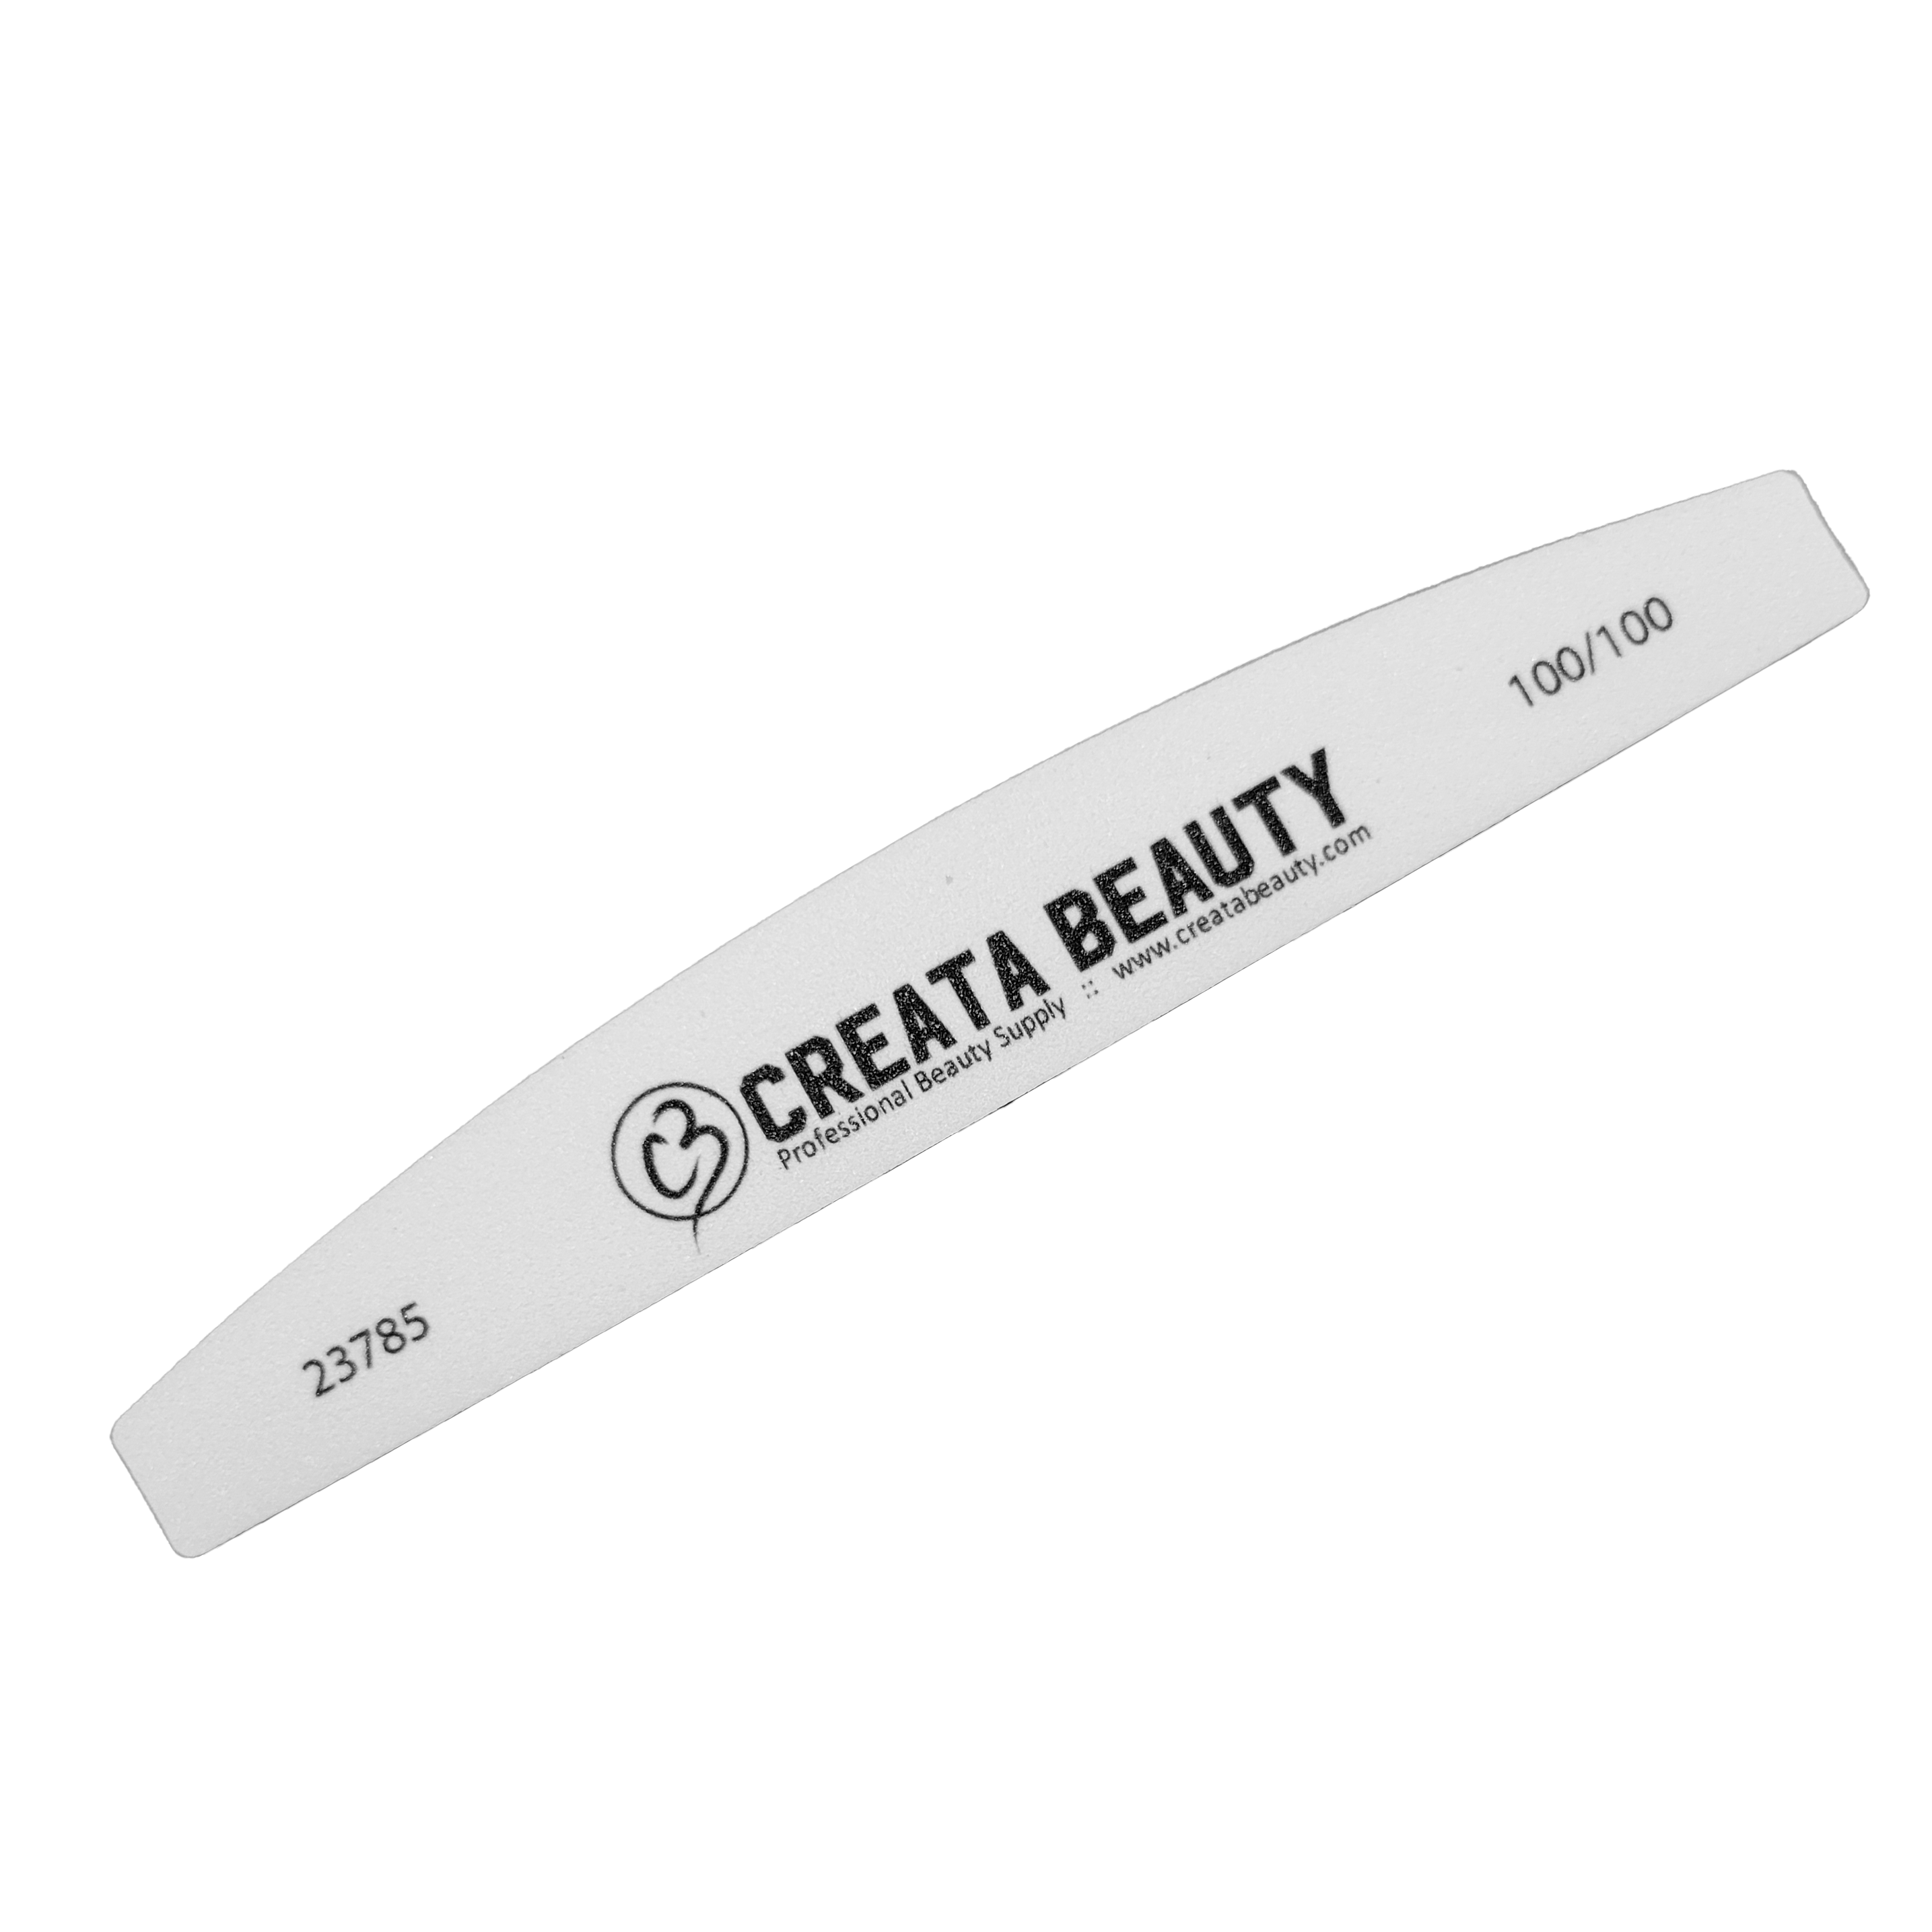 Creata Beauty Premium Files - Bridge White - Creata Beauty - Professional Beauty Products